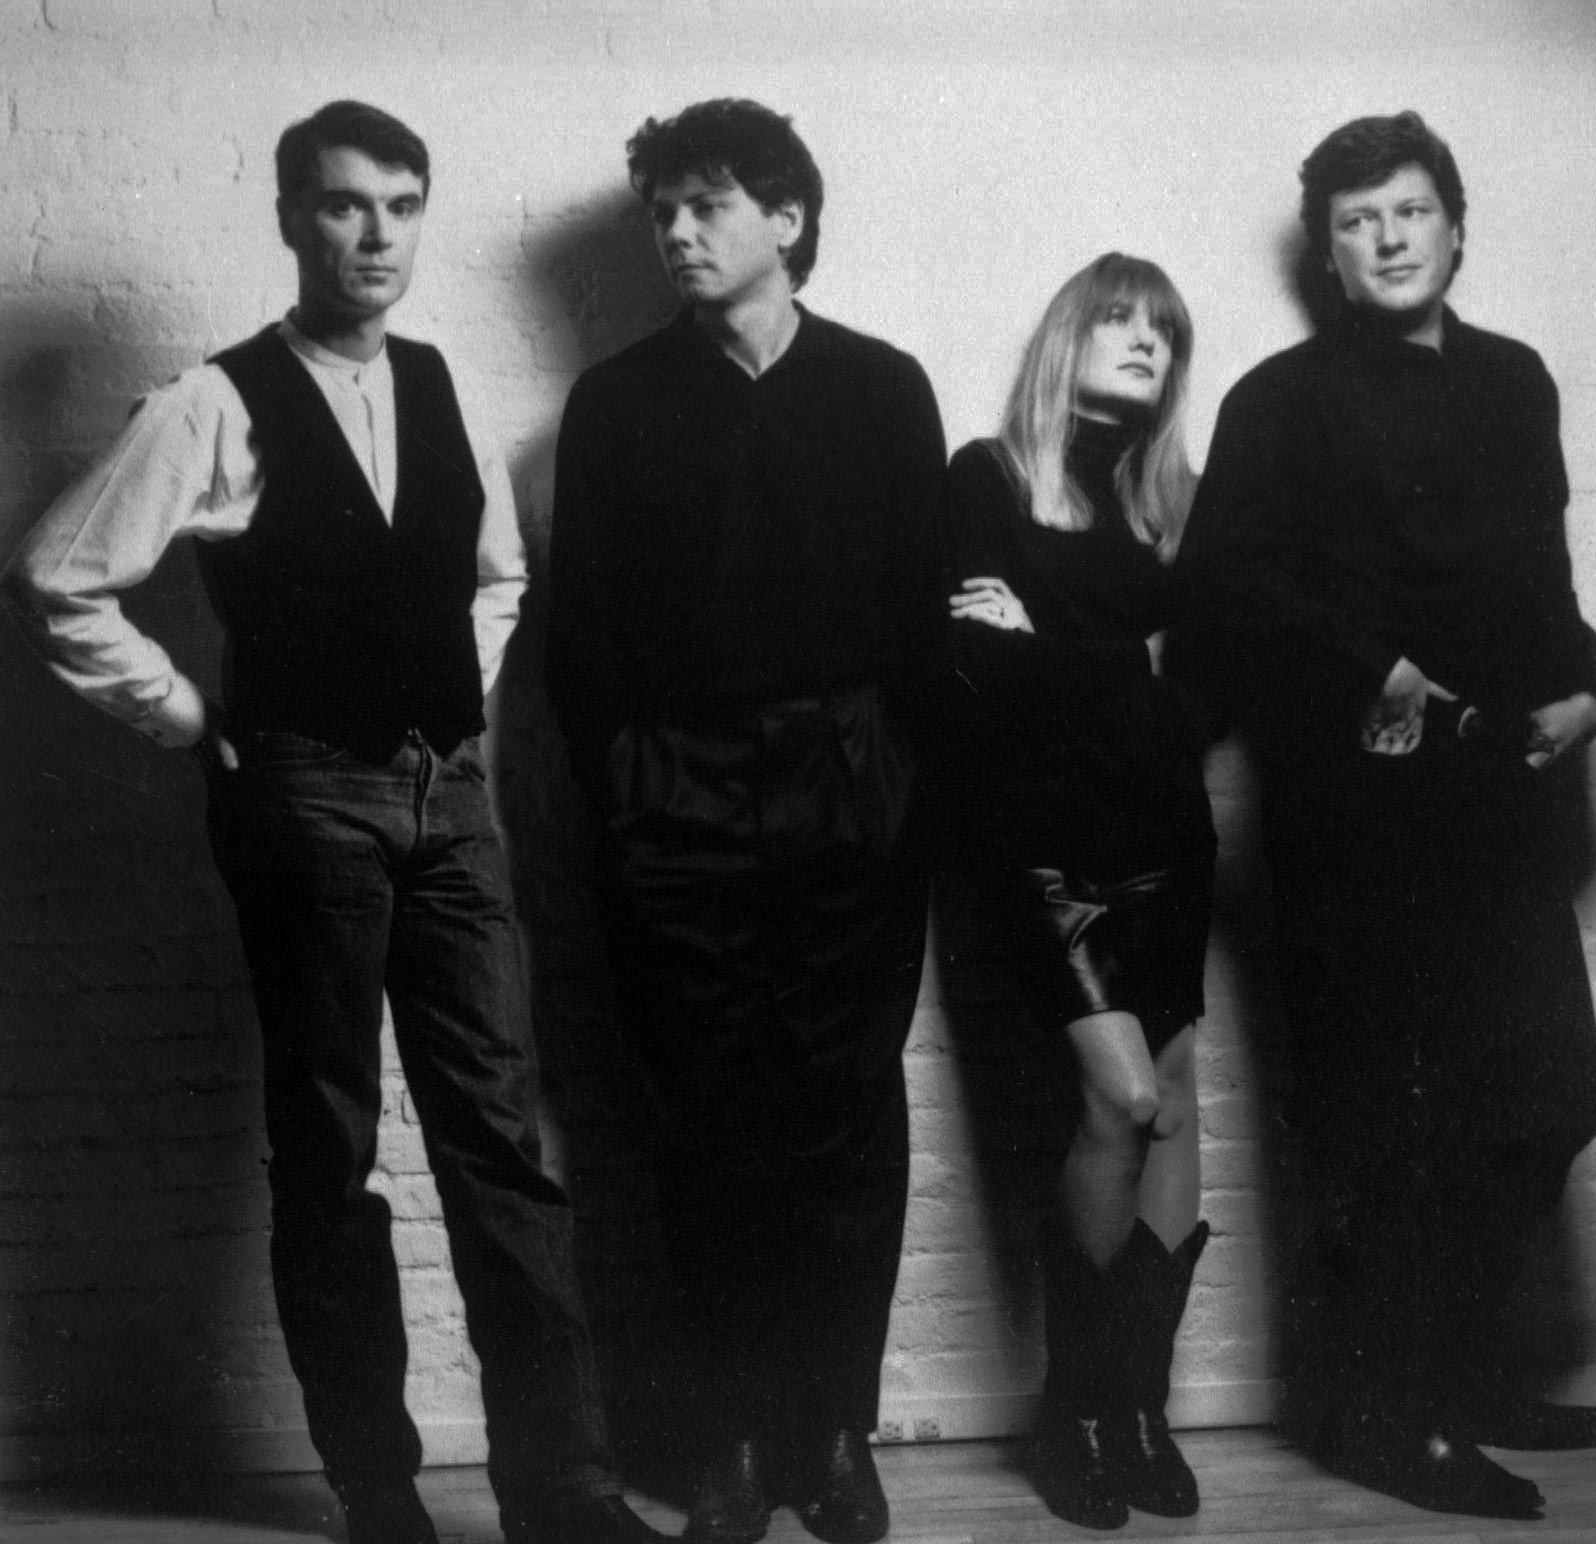 Talking Heads konsertfilm "Stop making sense" har blivit invald i National Film Registry. Arkivbild.